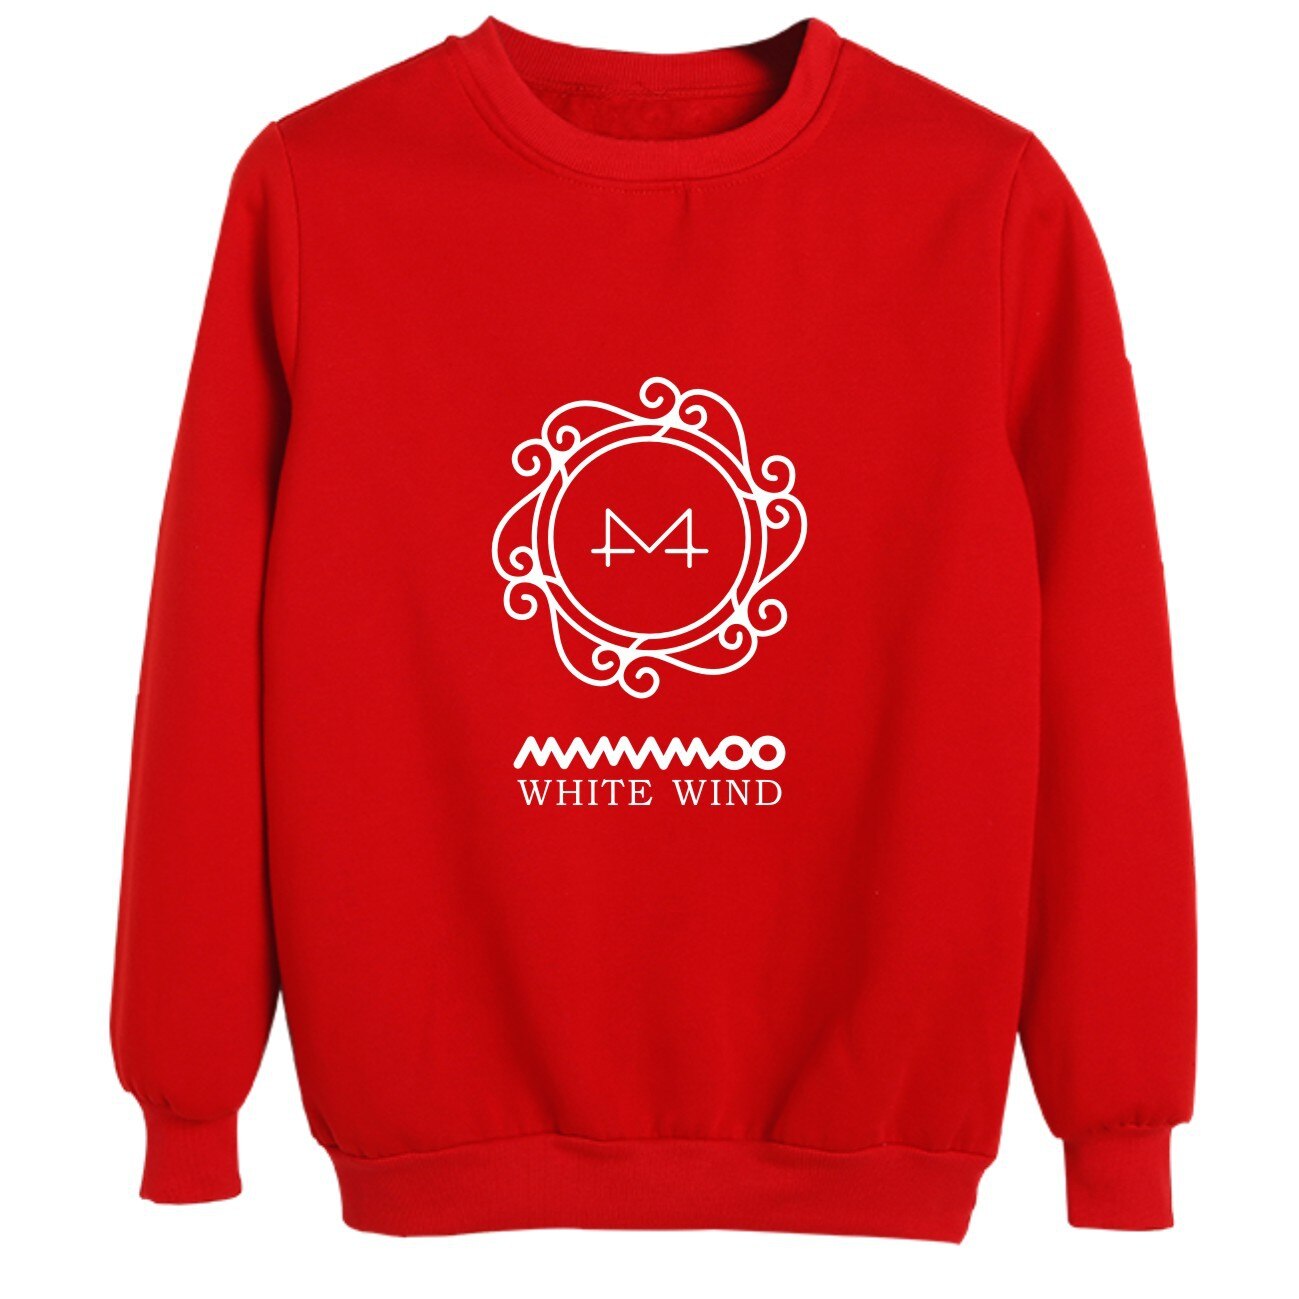 New arrival MAMAMOO pullover Sweatshirt New Album WHITE WIND Sweatshirt kpop Harajuku Hip hop Tops Coat 3 - Mamamoo Store